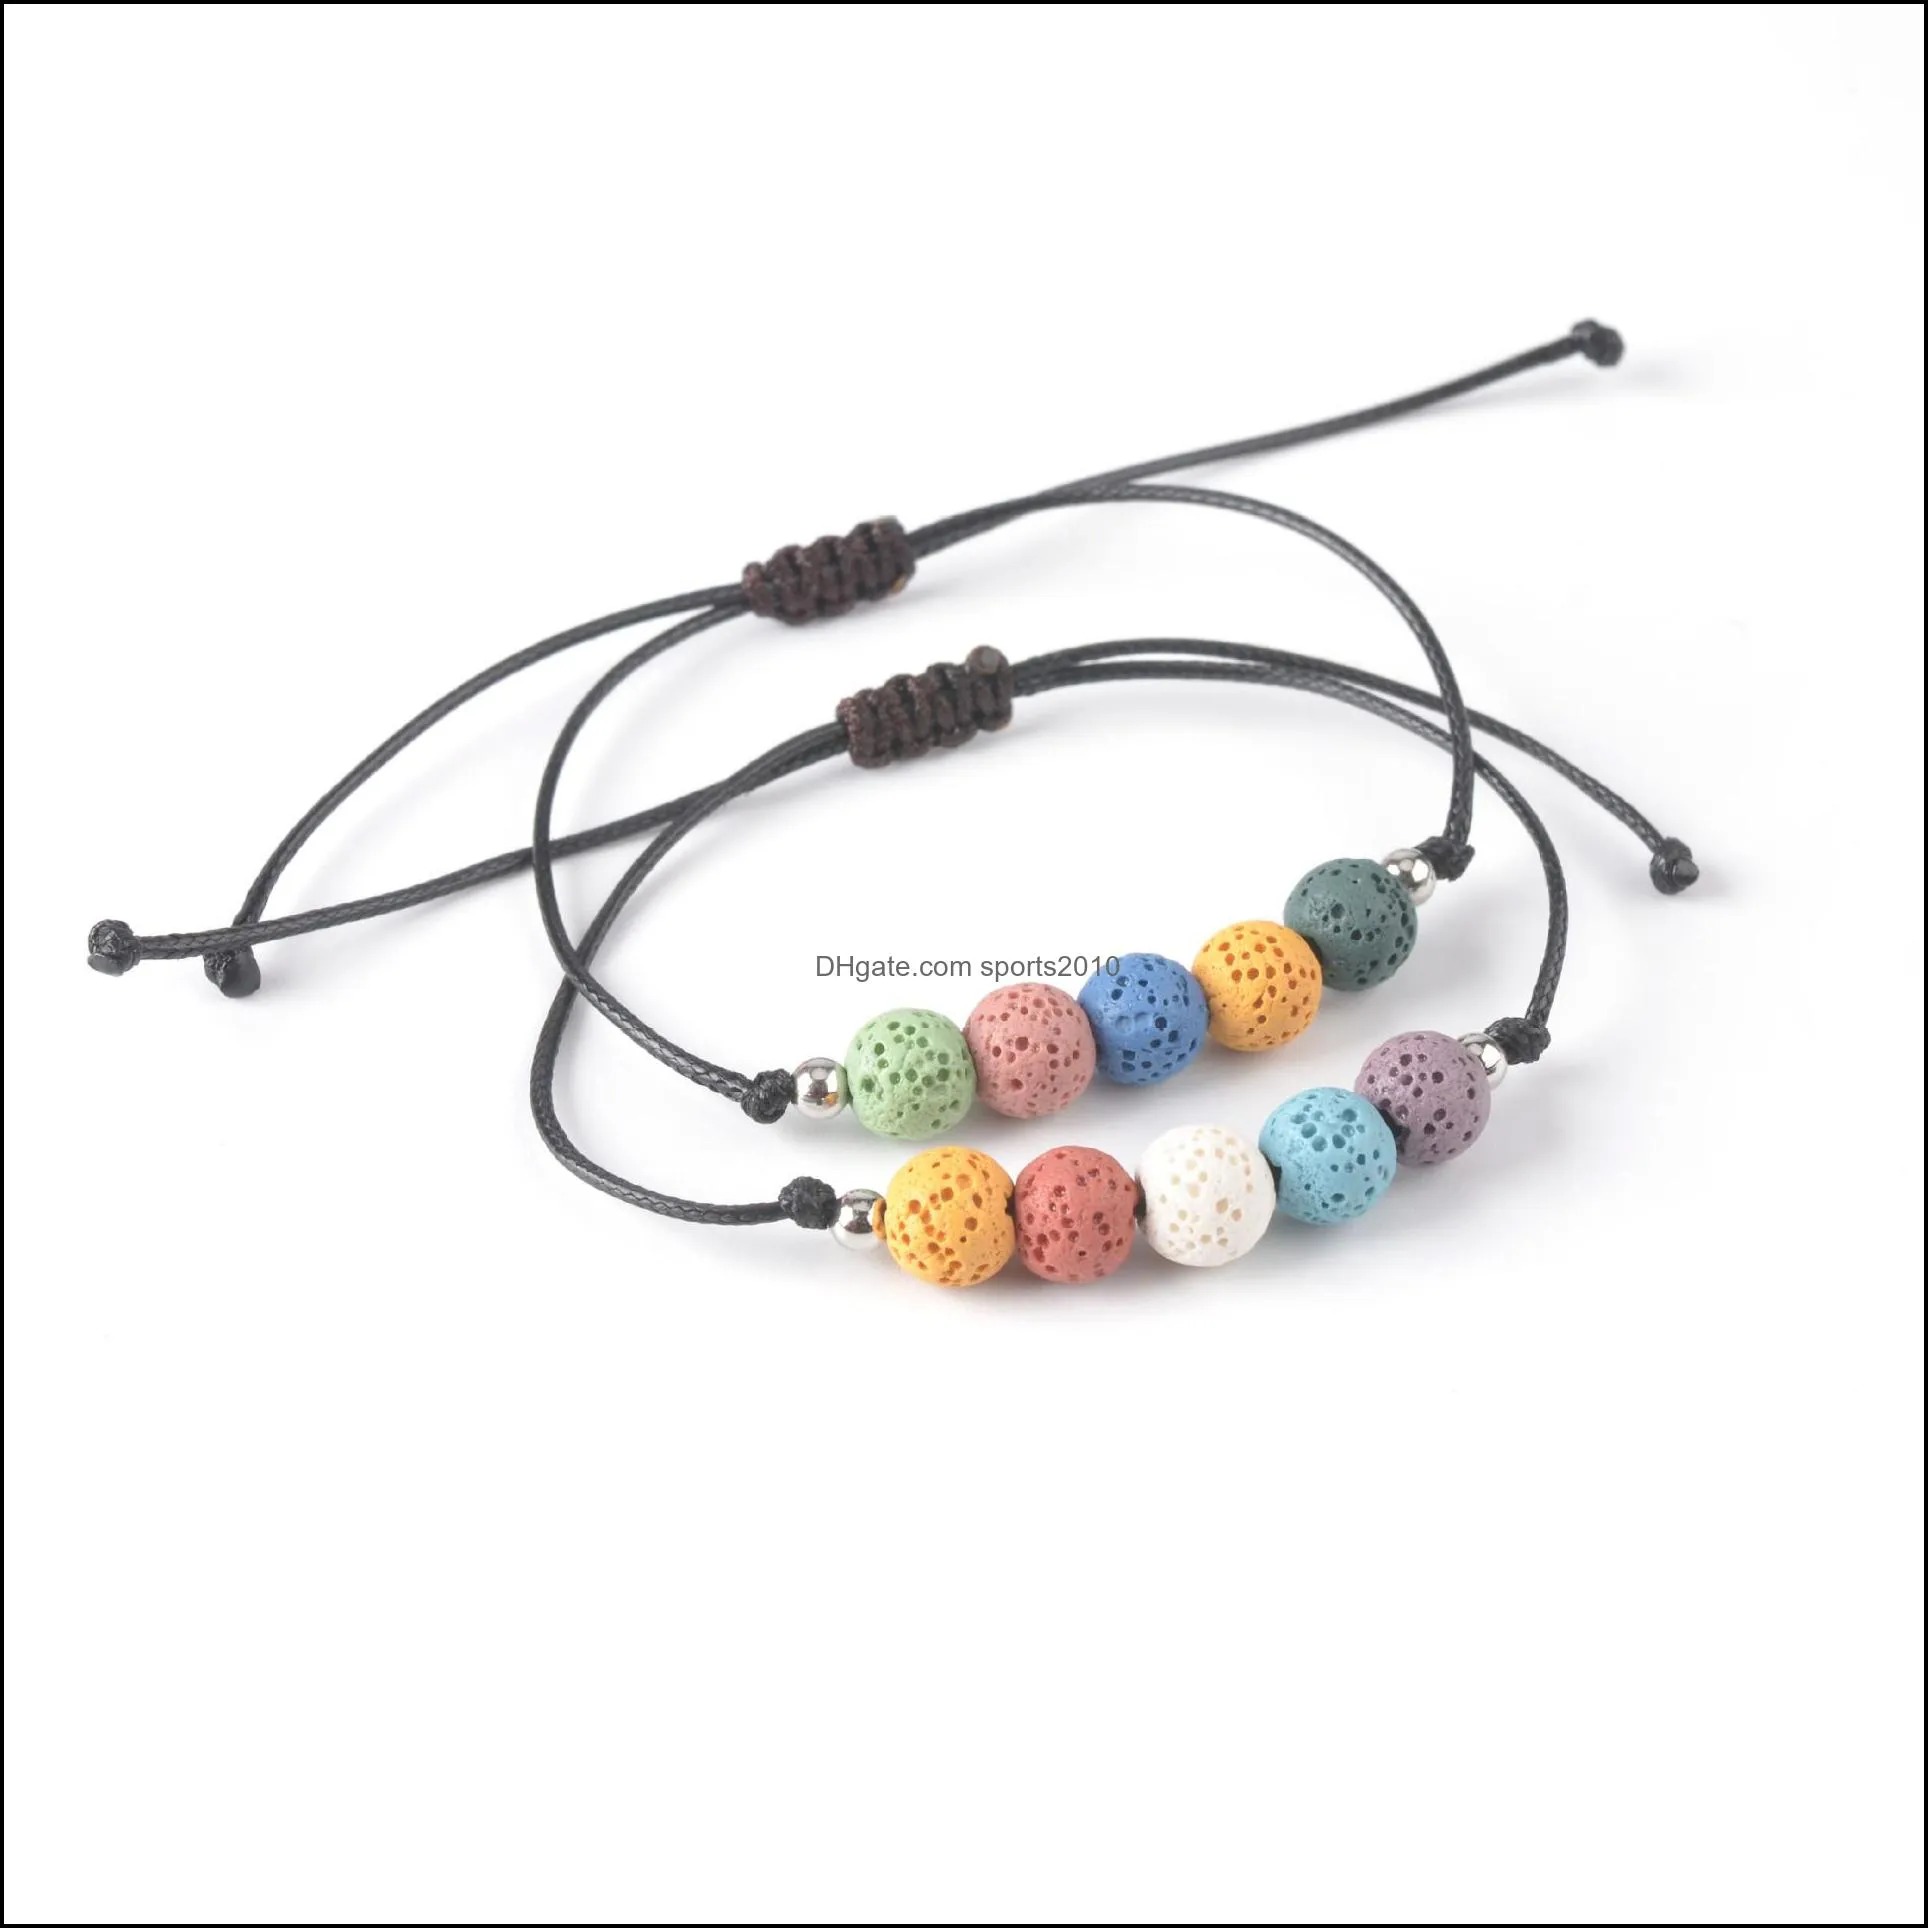 chakra colorful lava stone bead strand bracelet diy essential oil perfume diffuser rope braided lover friendship bracelets sports2010